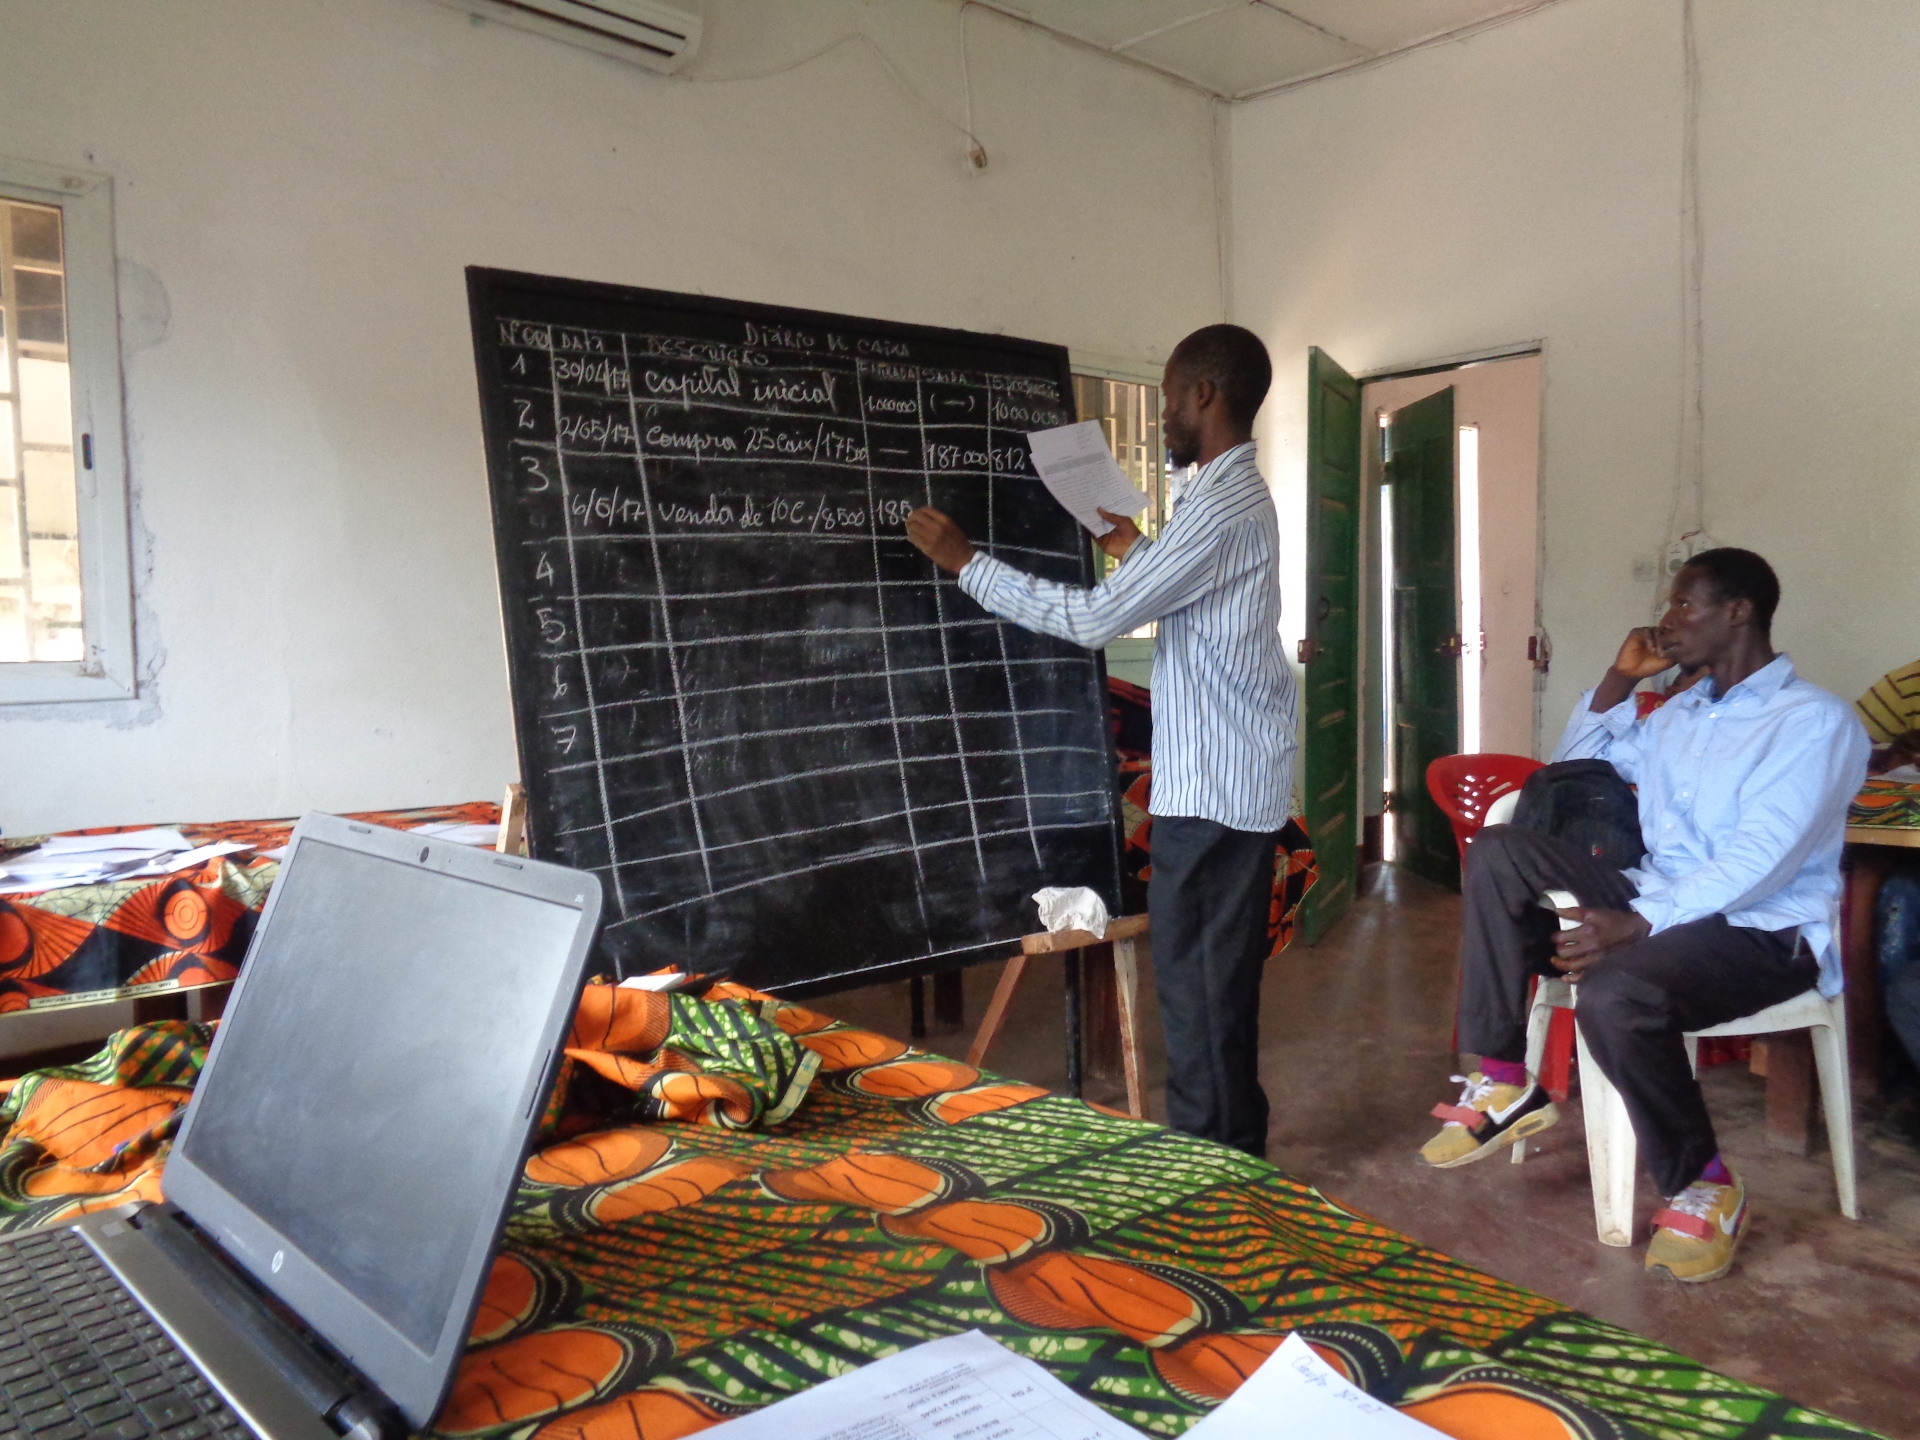 Corsi di formazione in contabilità e business plan Guinea Bissau Mani Tese 2017